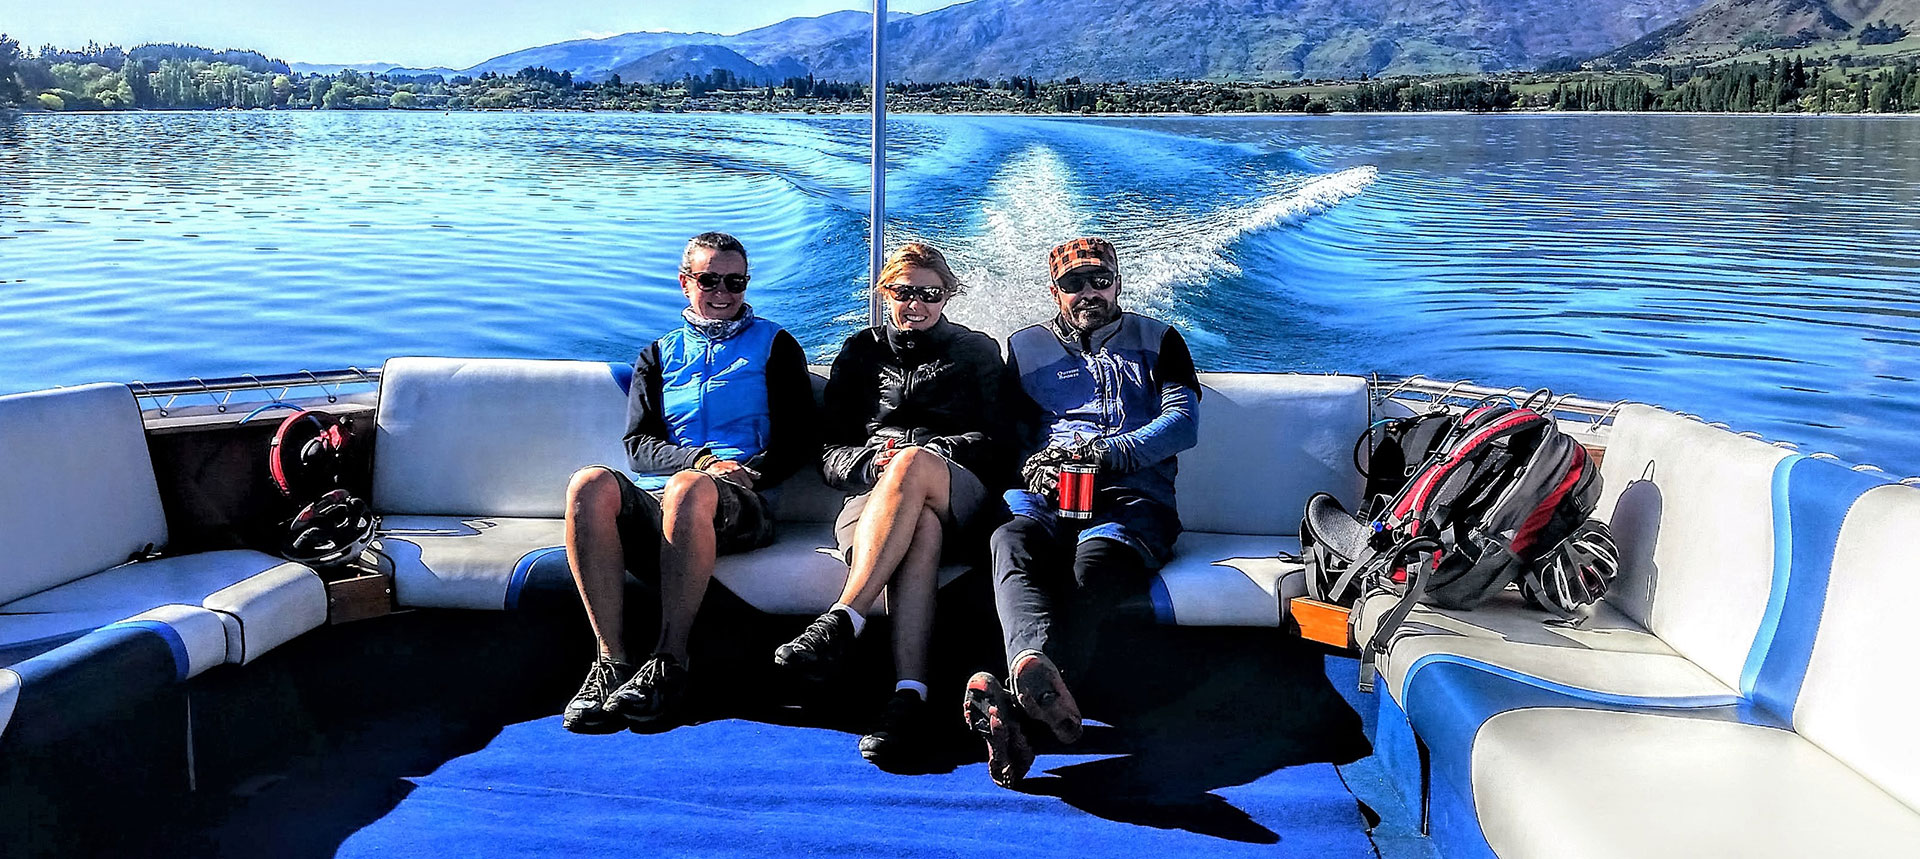 Bike + boat tour | Discover Wanaka | Guided Tours